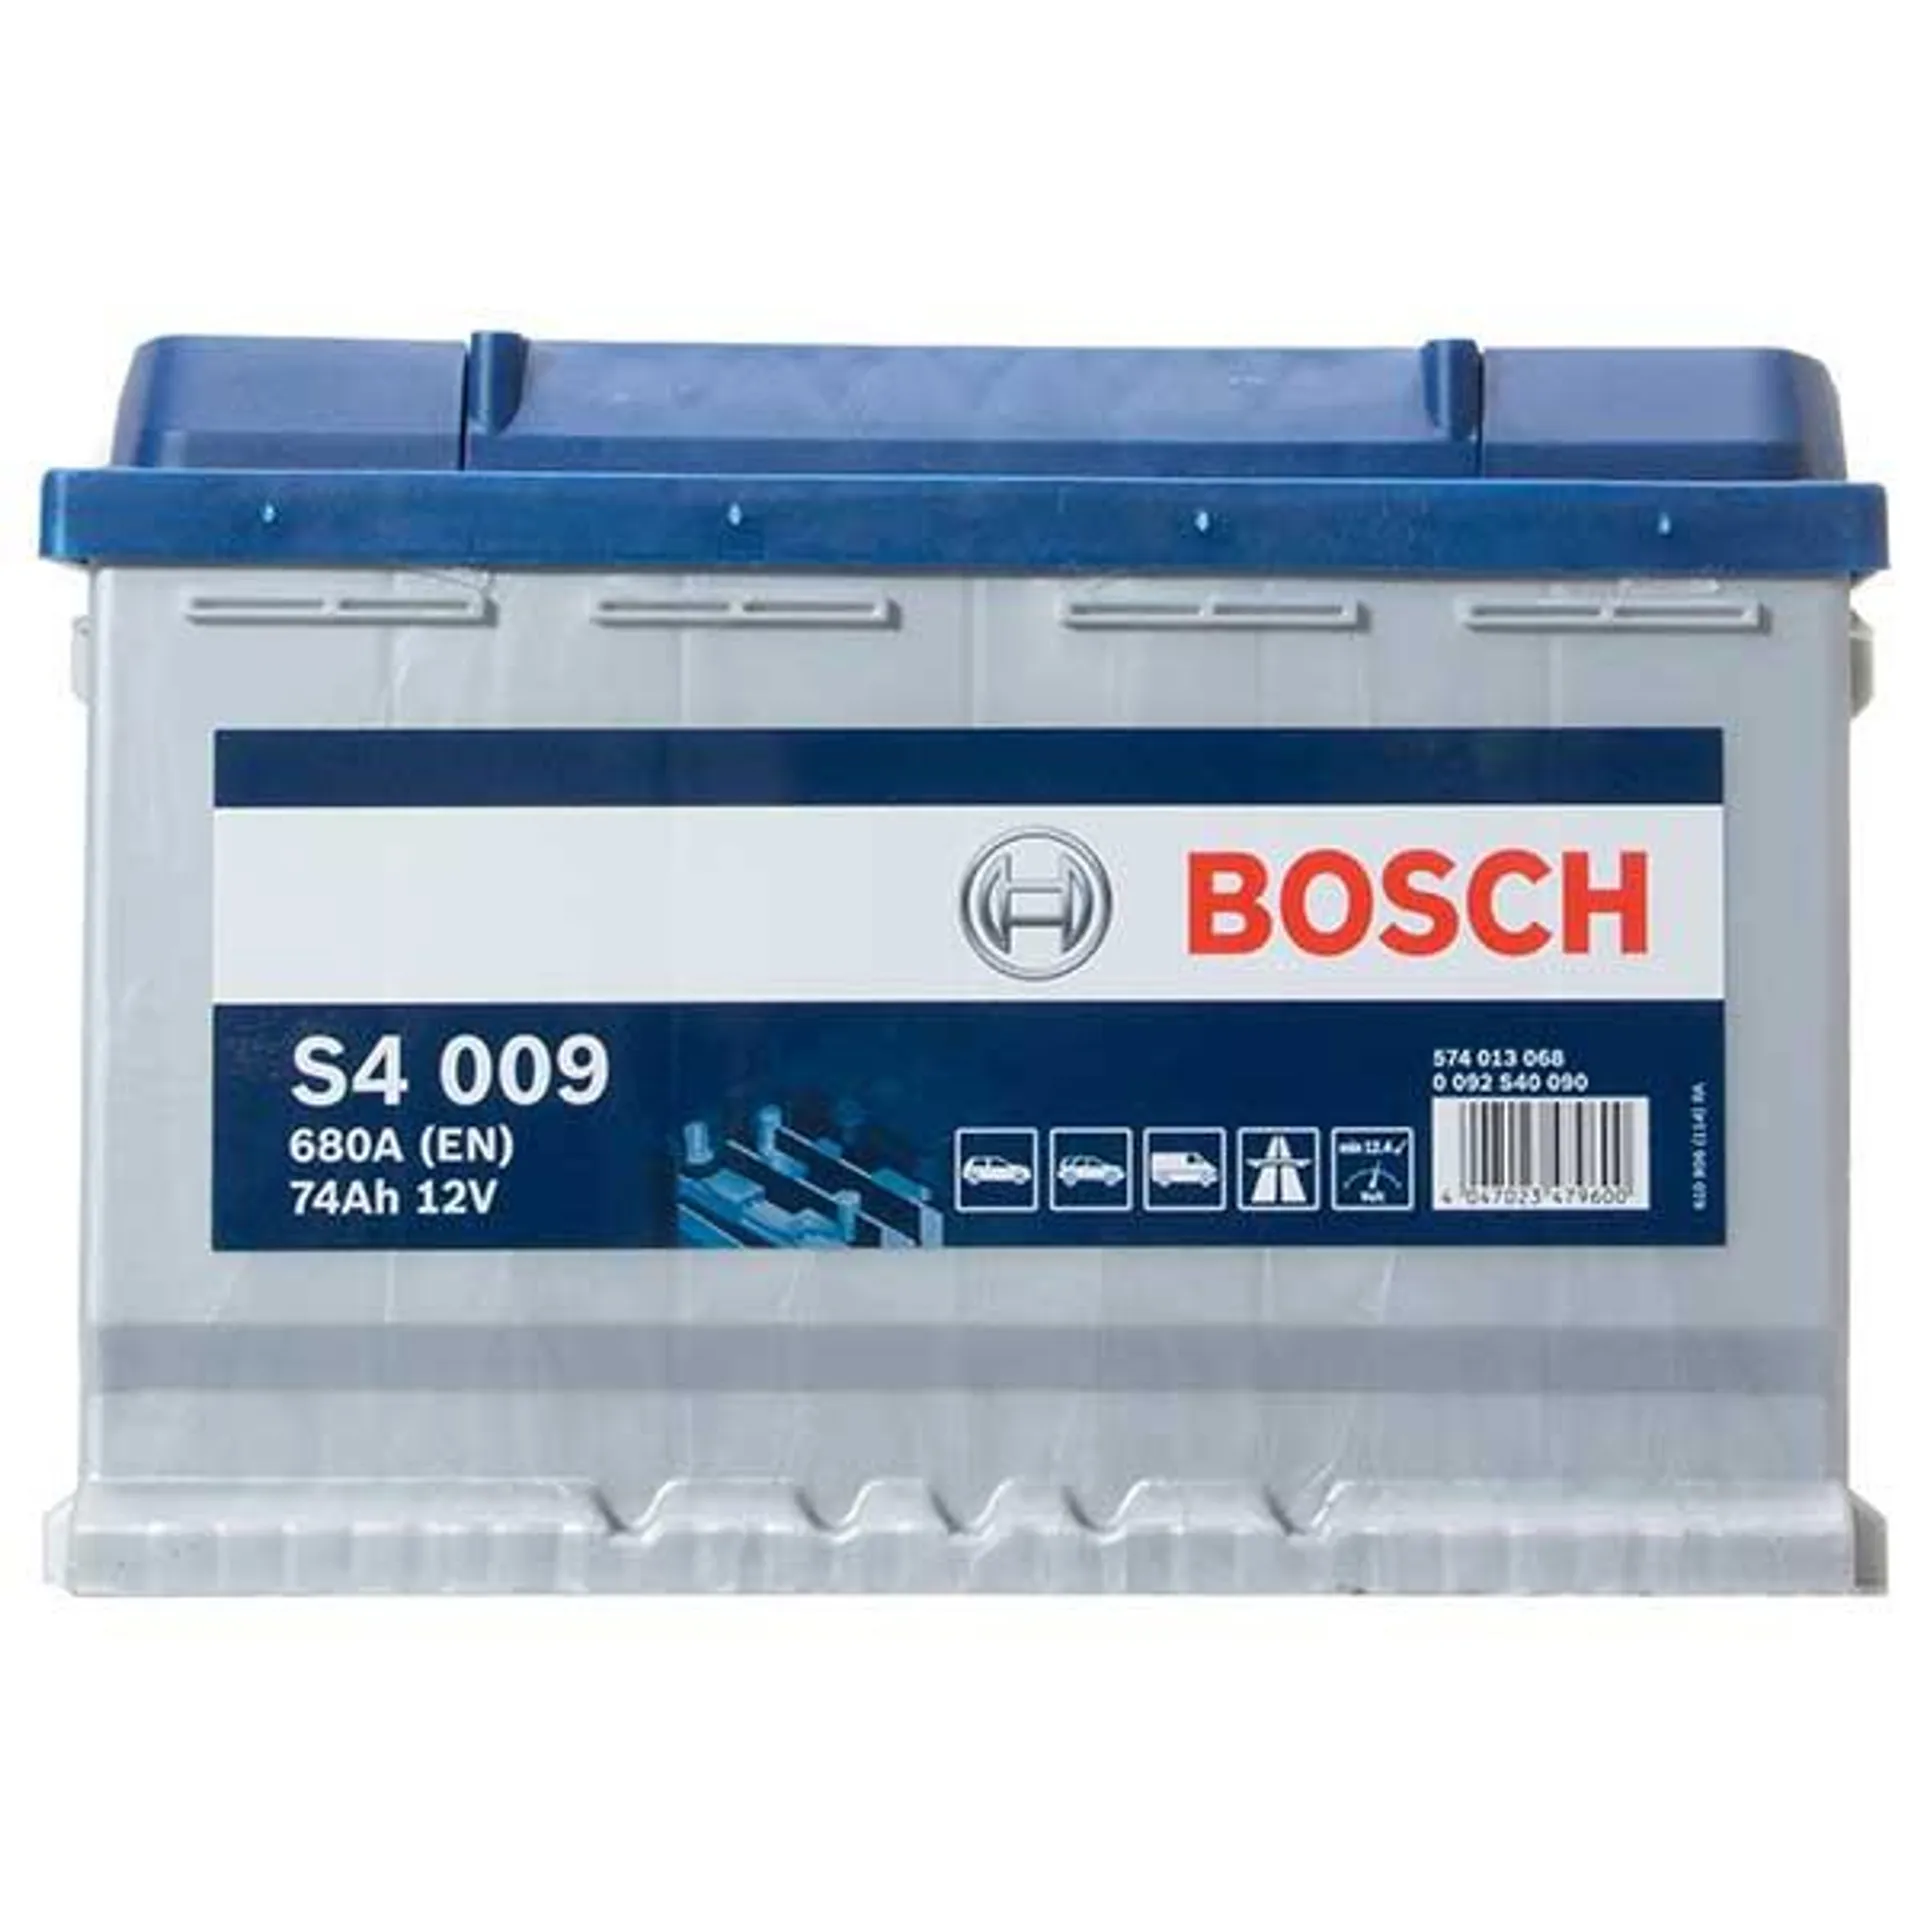 Bosch Car Battery 086 4 Year Guarantee